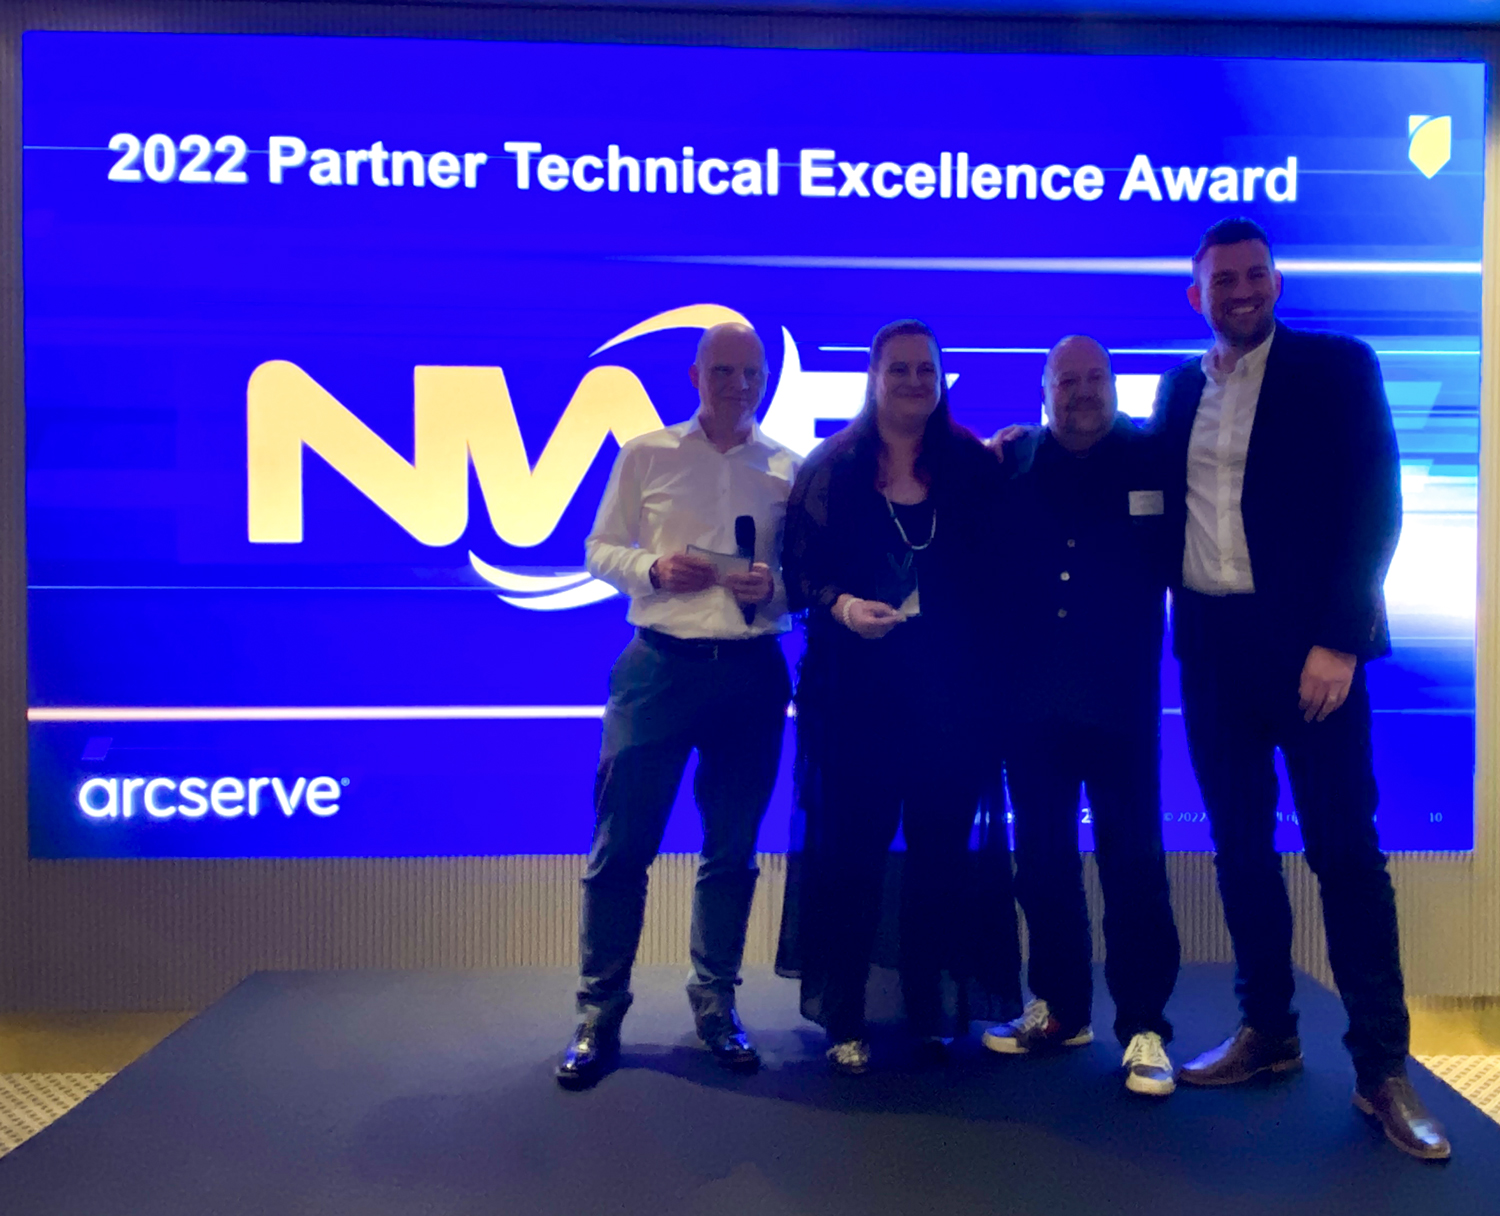 nwe_it_arcserve_partner_technical_excellence_award